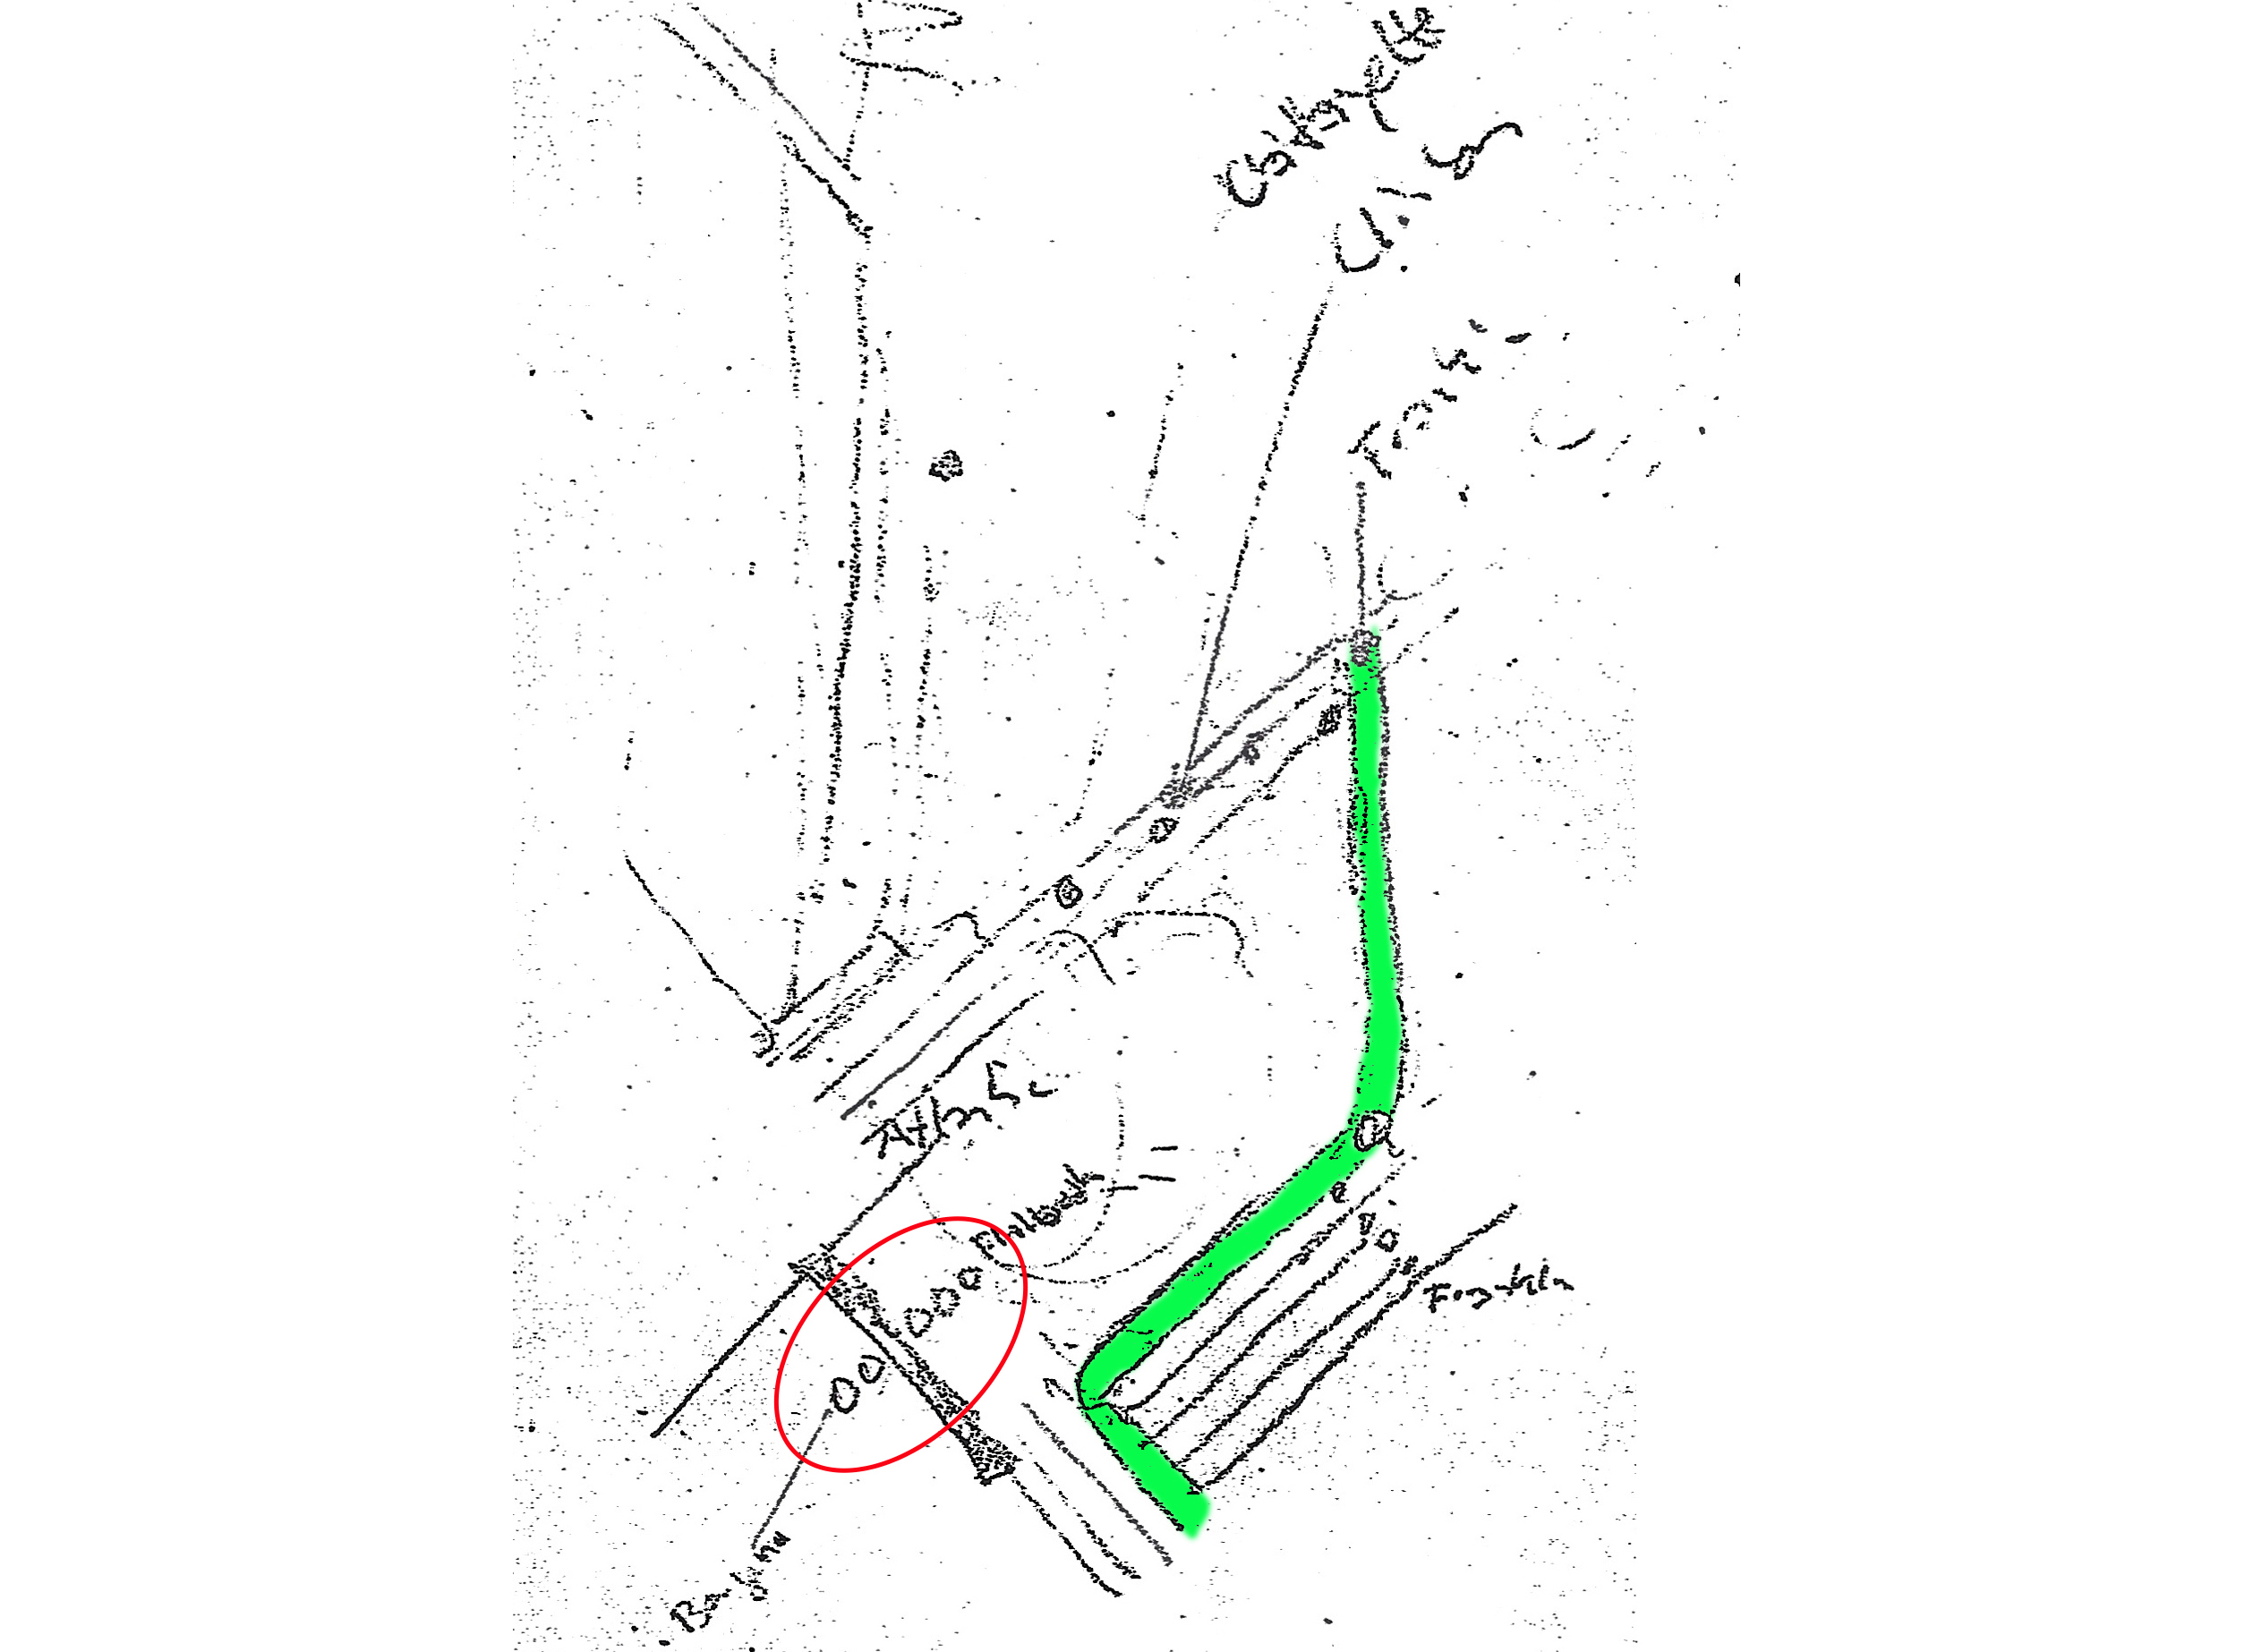 Genesis of the Vignelli subway map